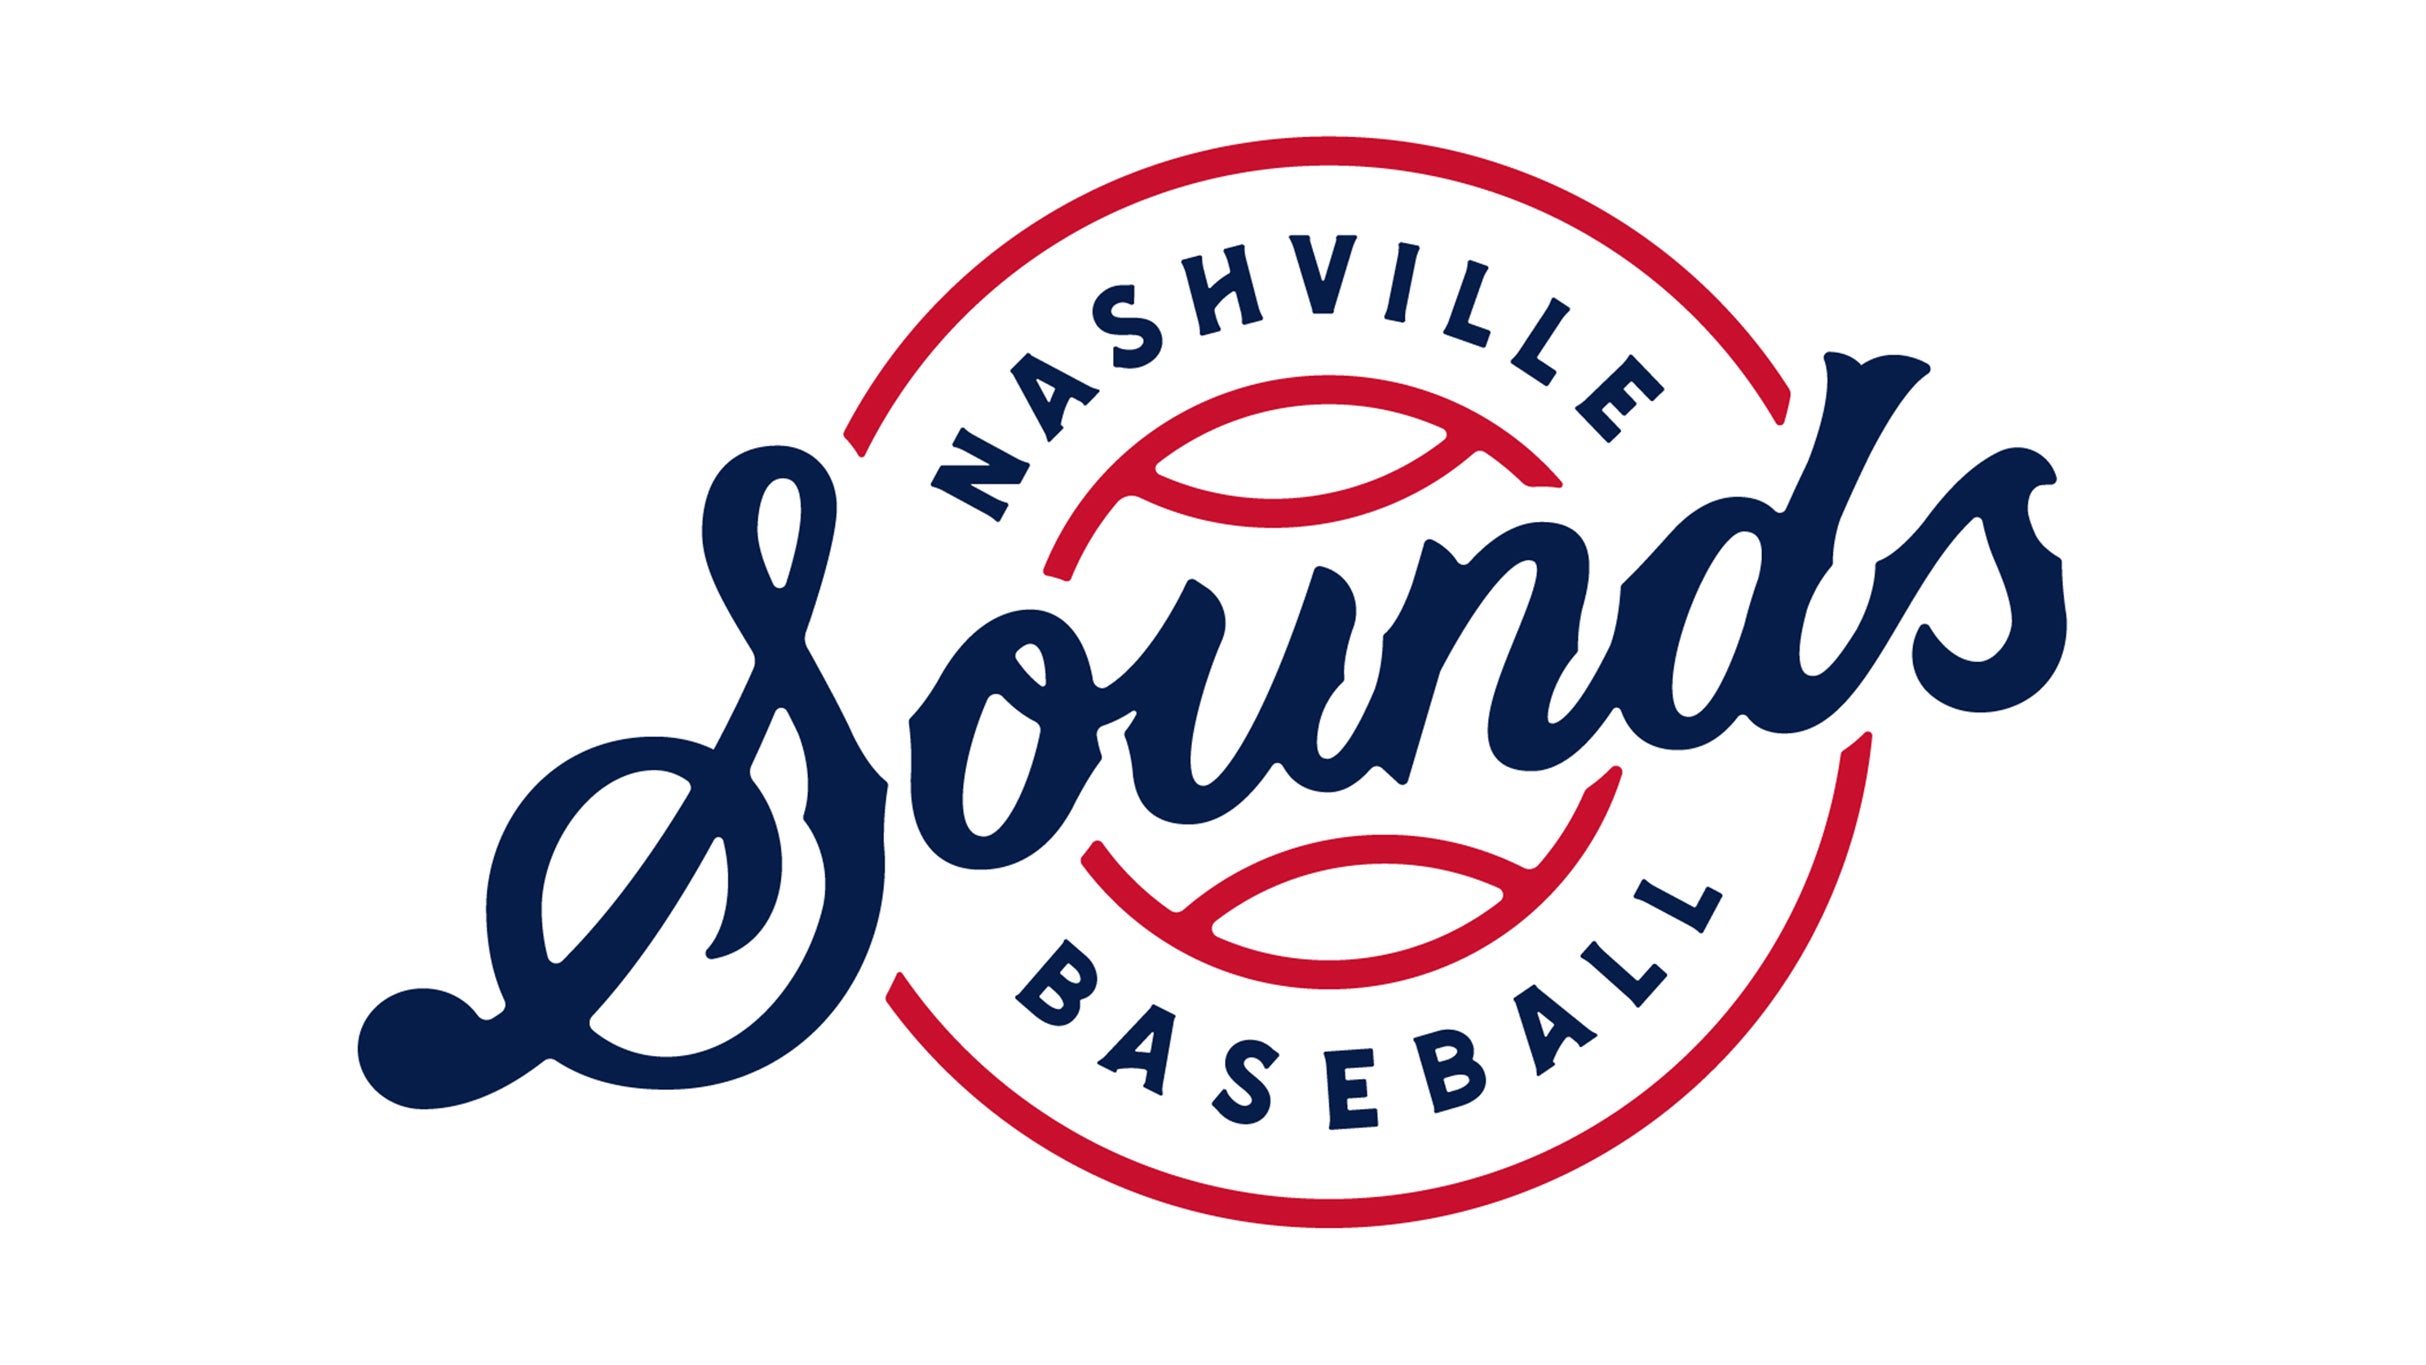 MLB Home Run Derby X Nashville presale information on freepresalepasswords.com